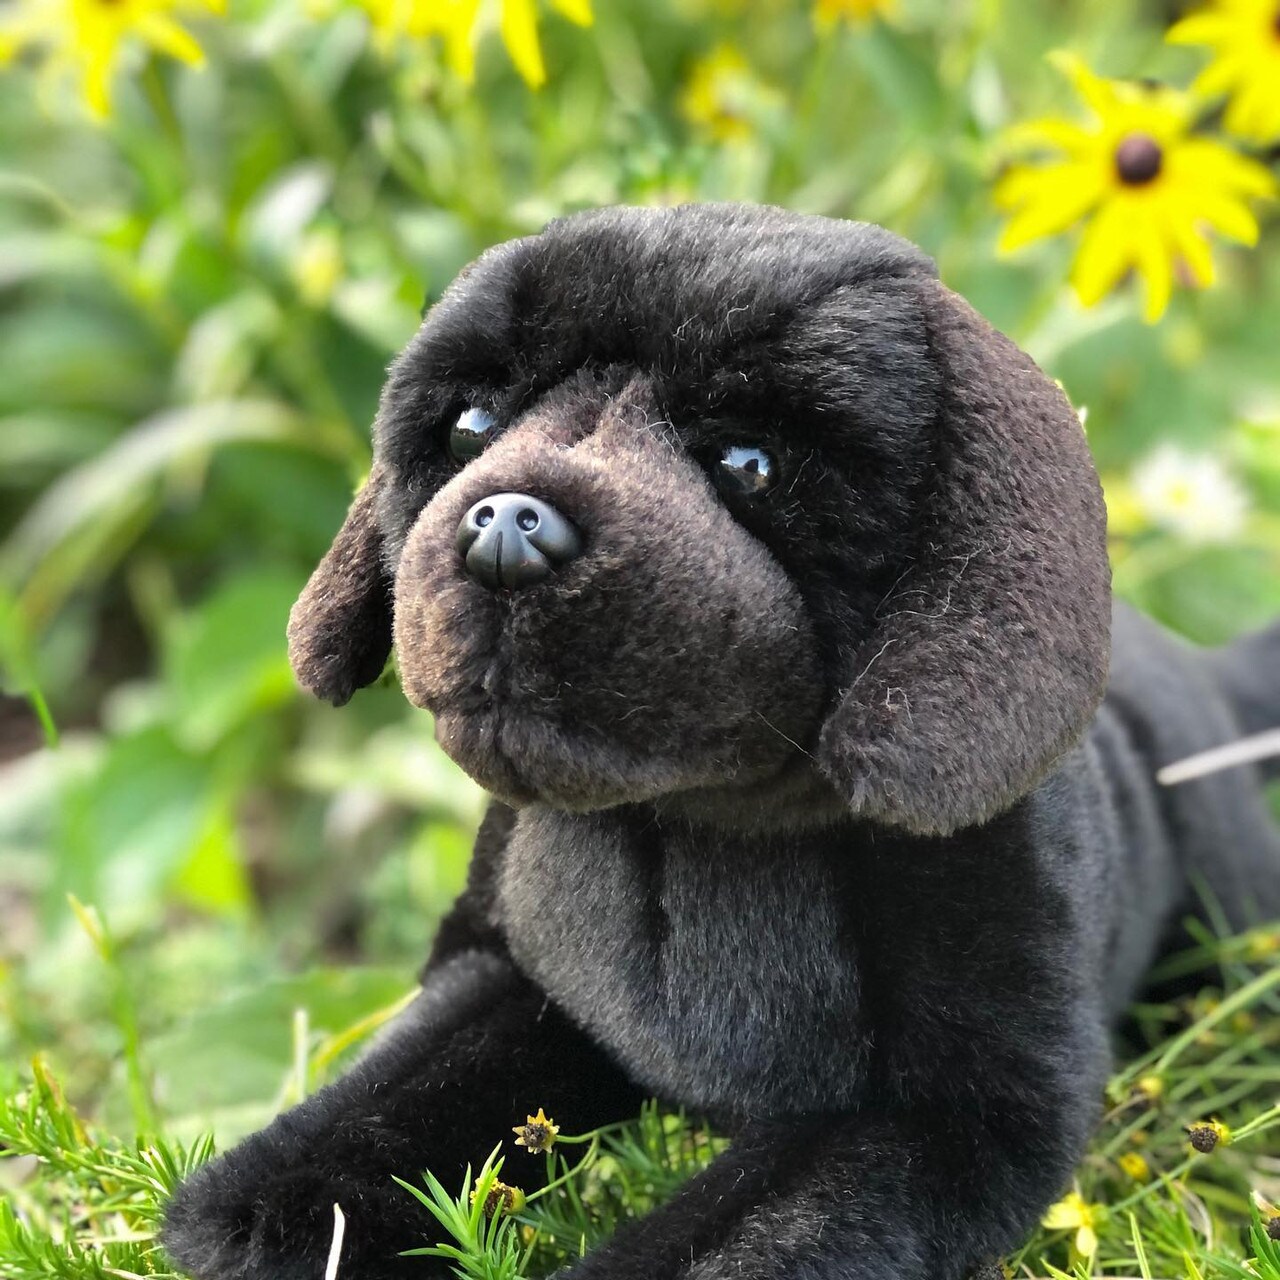 Floppy and Lovable: Meet Our Black Labrador Retriever Plush Toy